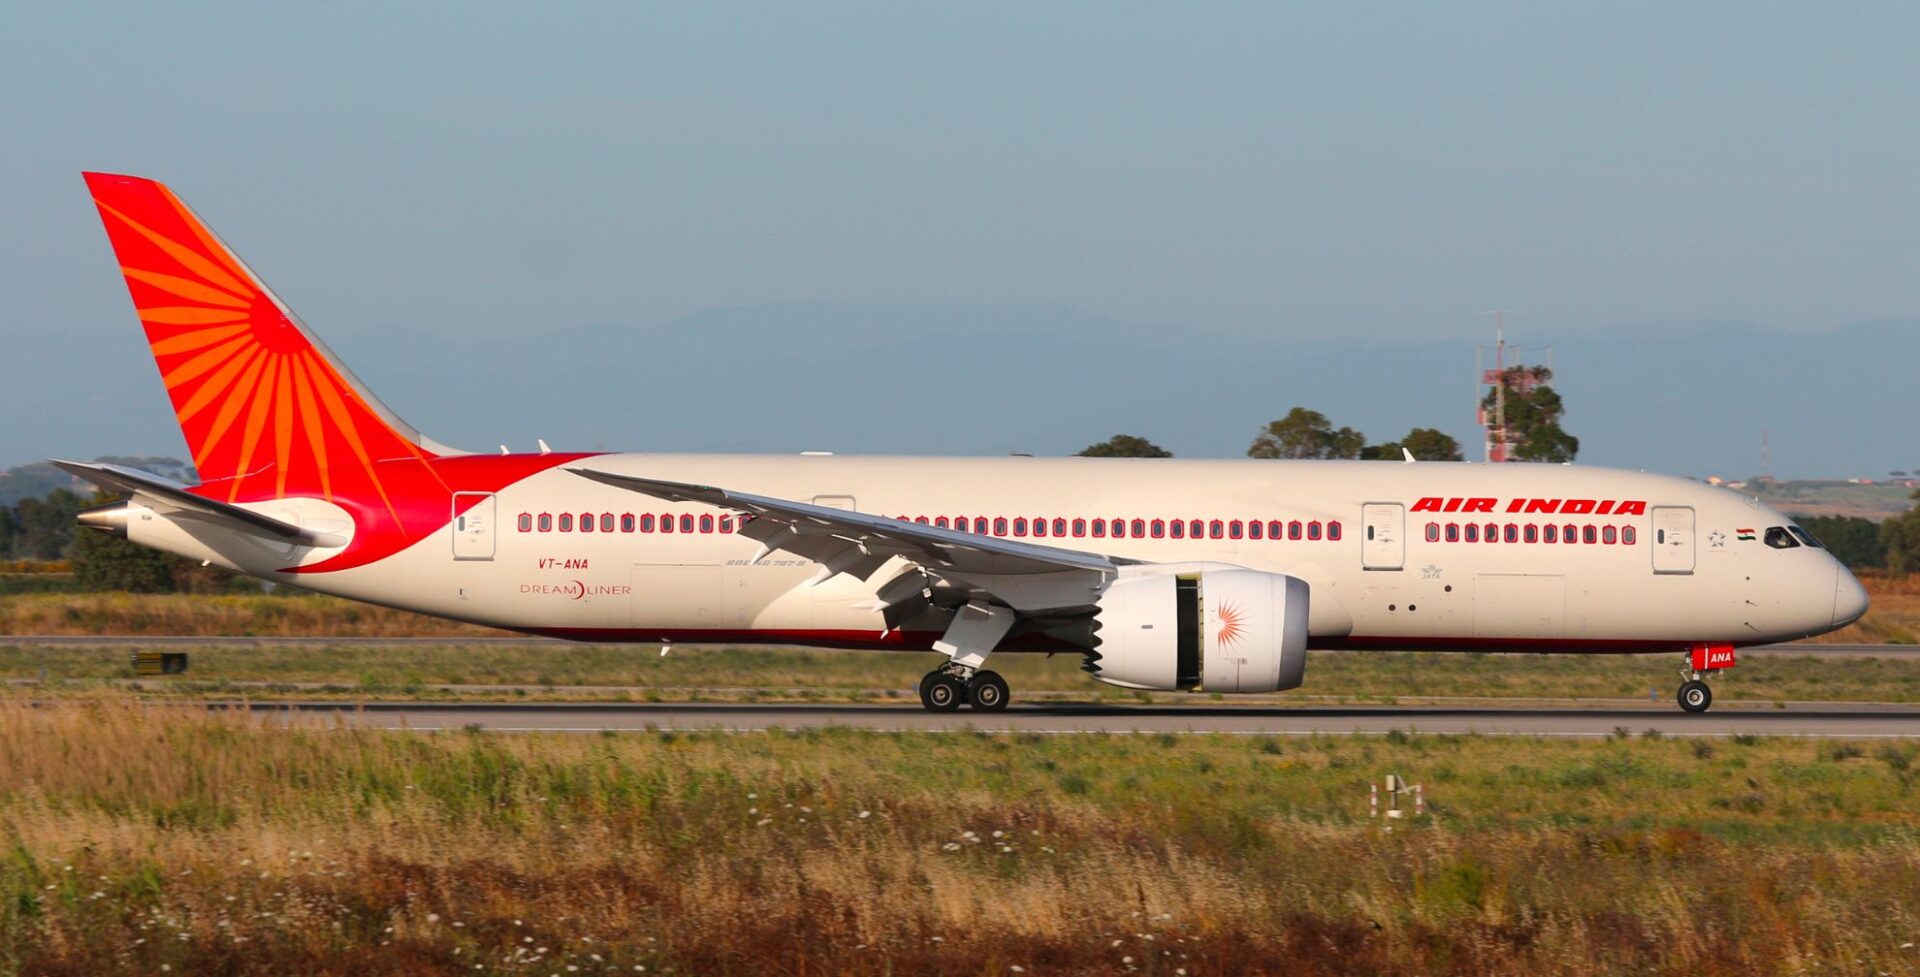 Air India เหมาเครื่องบินรวดเดียว 470 ลำ ทุบสถิติโลก กับงบ 2.3 ล้านล้านบาท